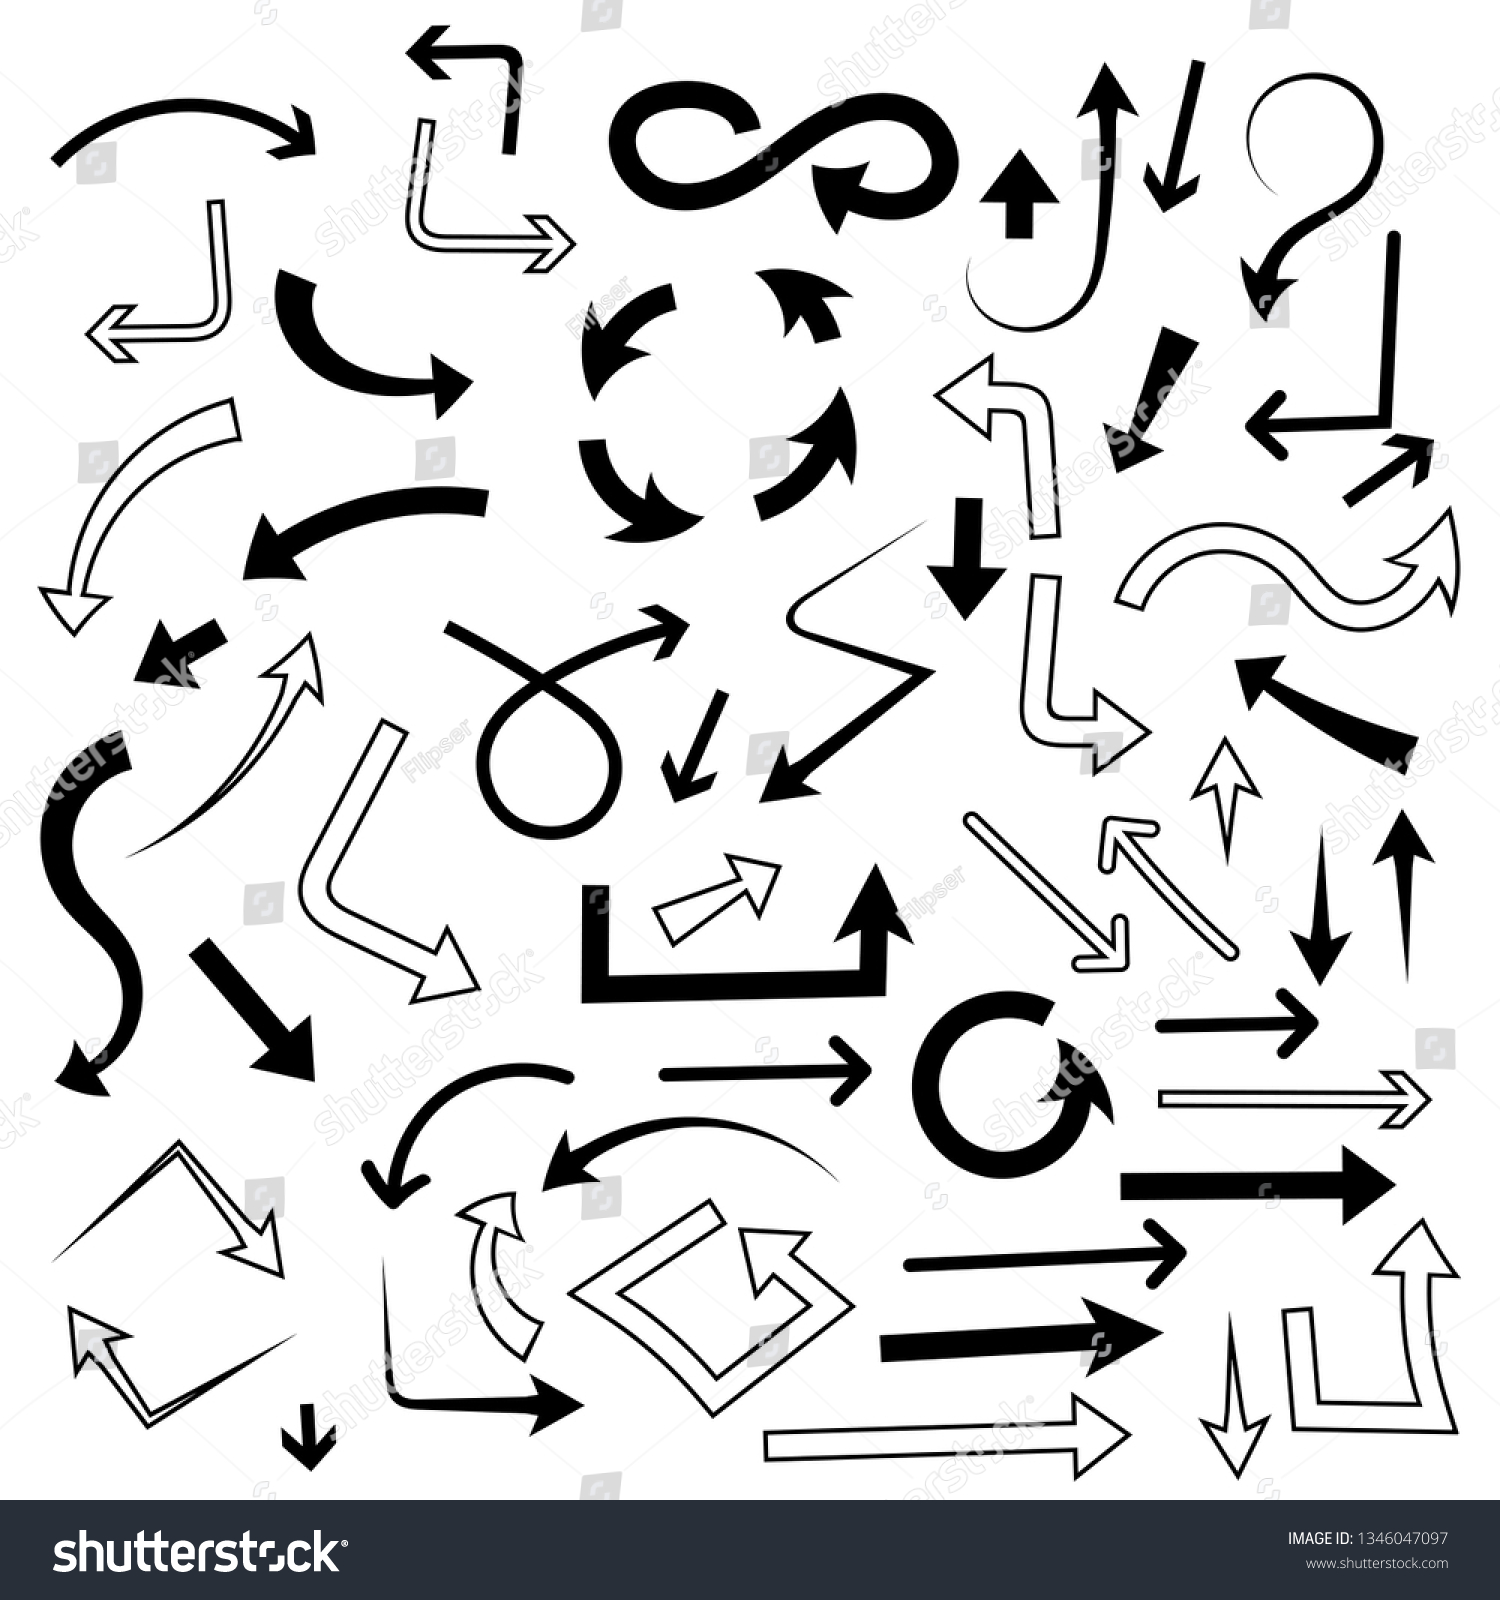 Arrows set. Mixed style black flat icons. Vector illustration isolated on white background #1346047097